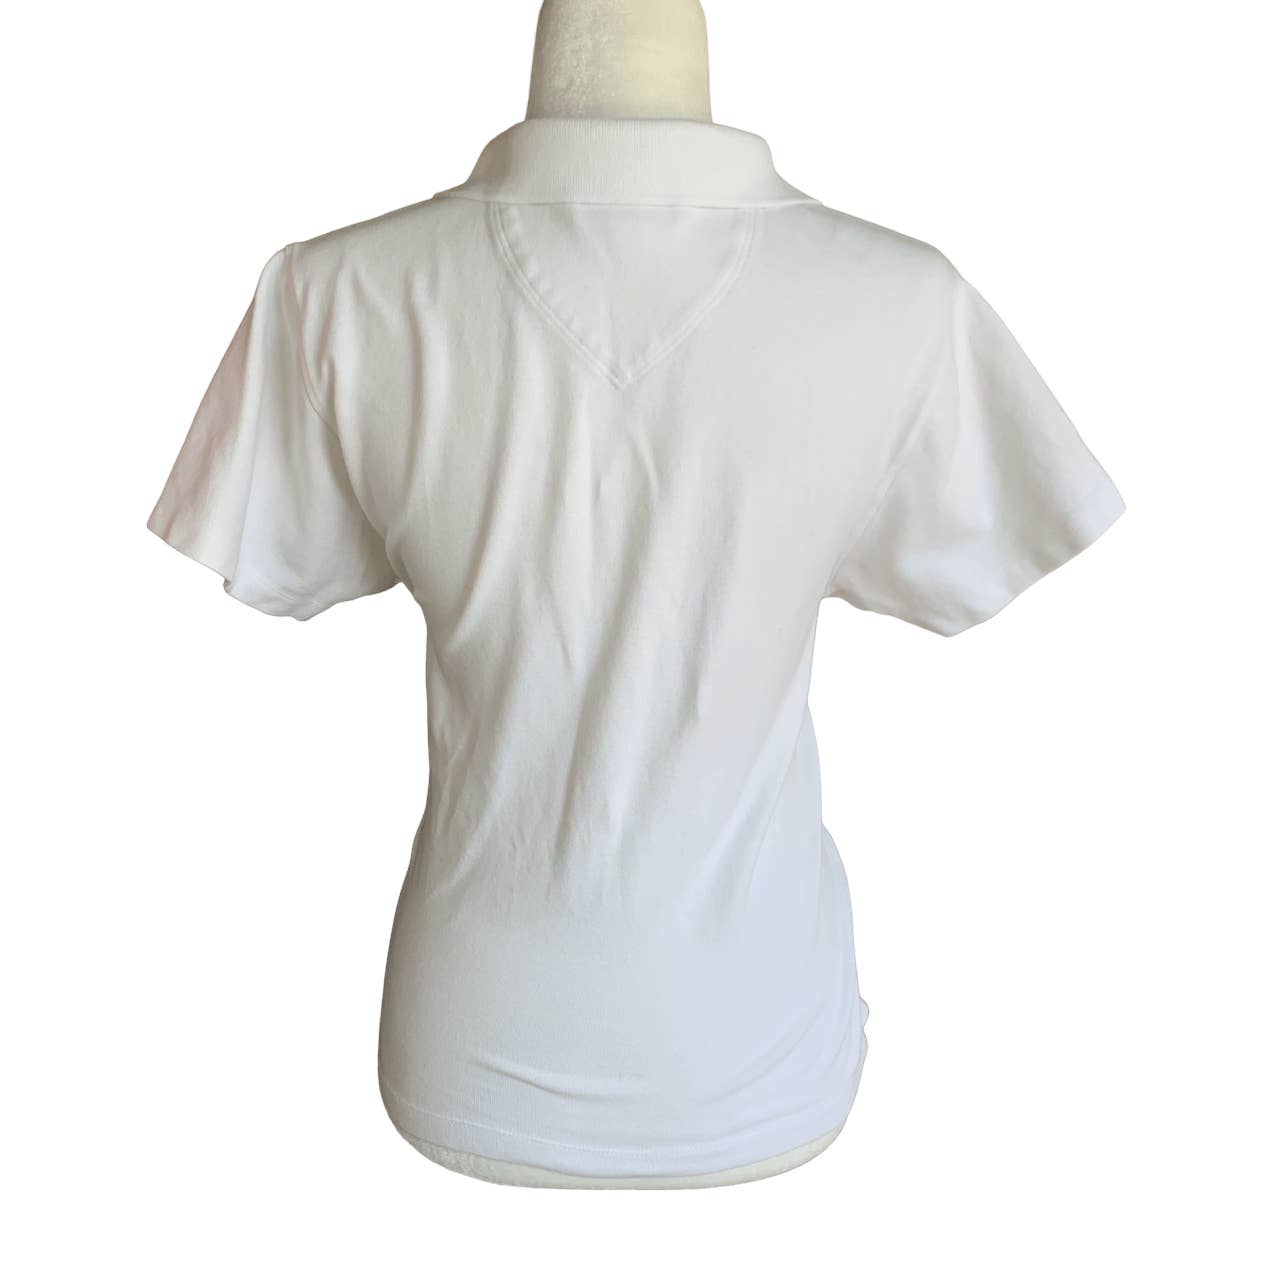 Ariat TEK Polo Shirt in White - Woman's X-Large